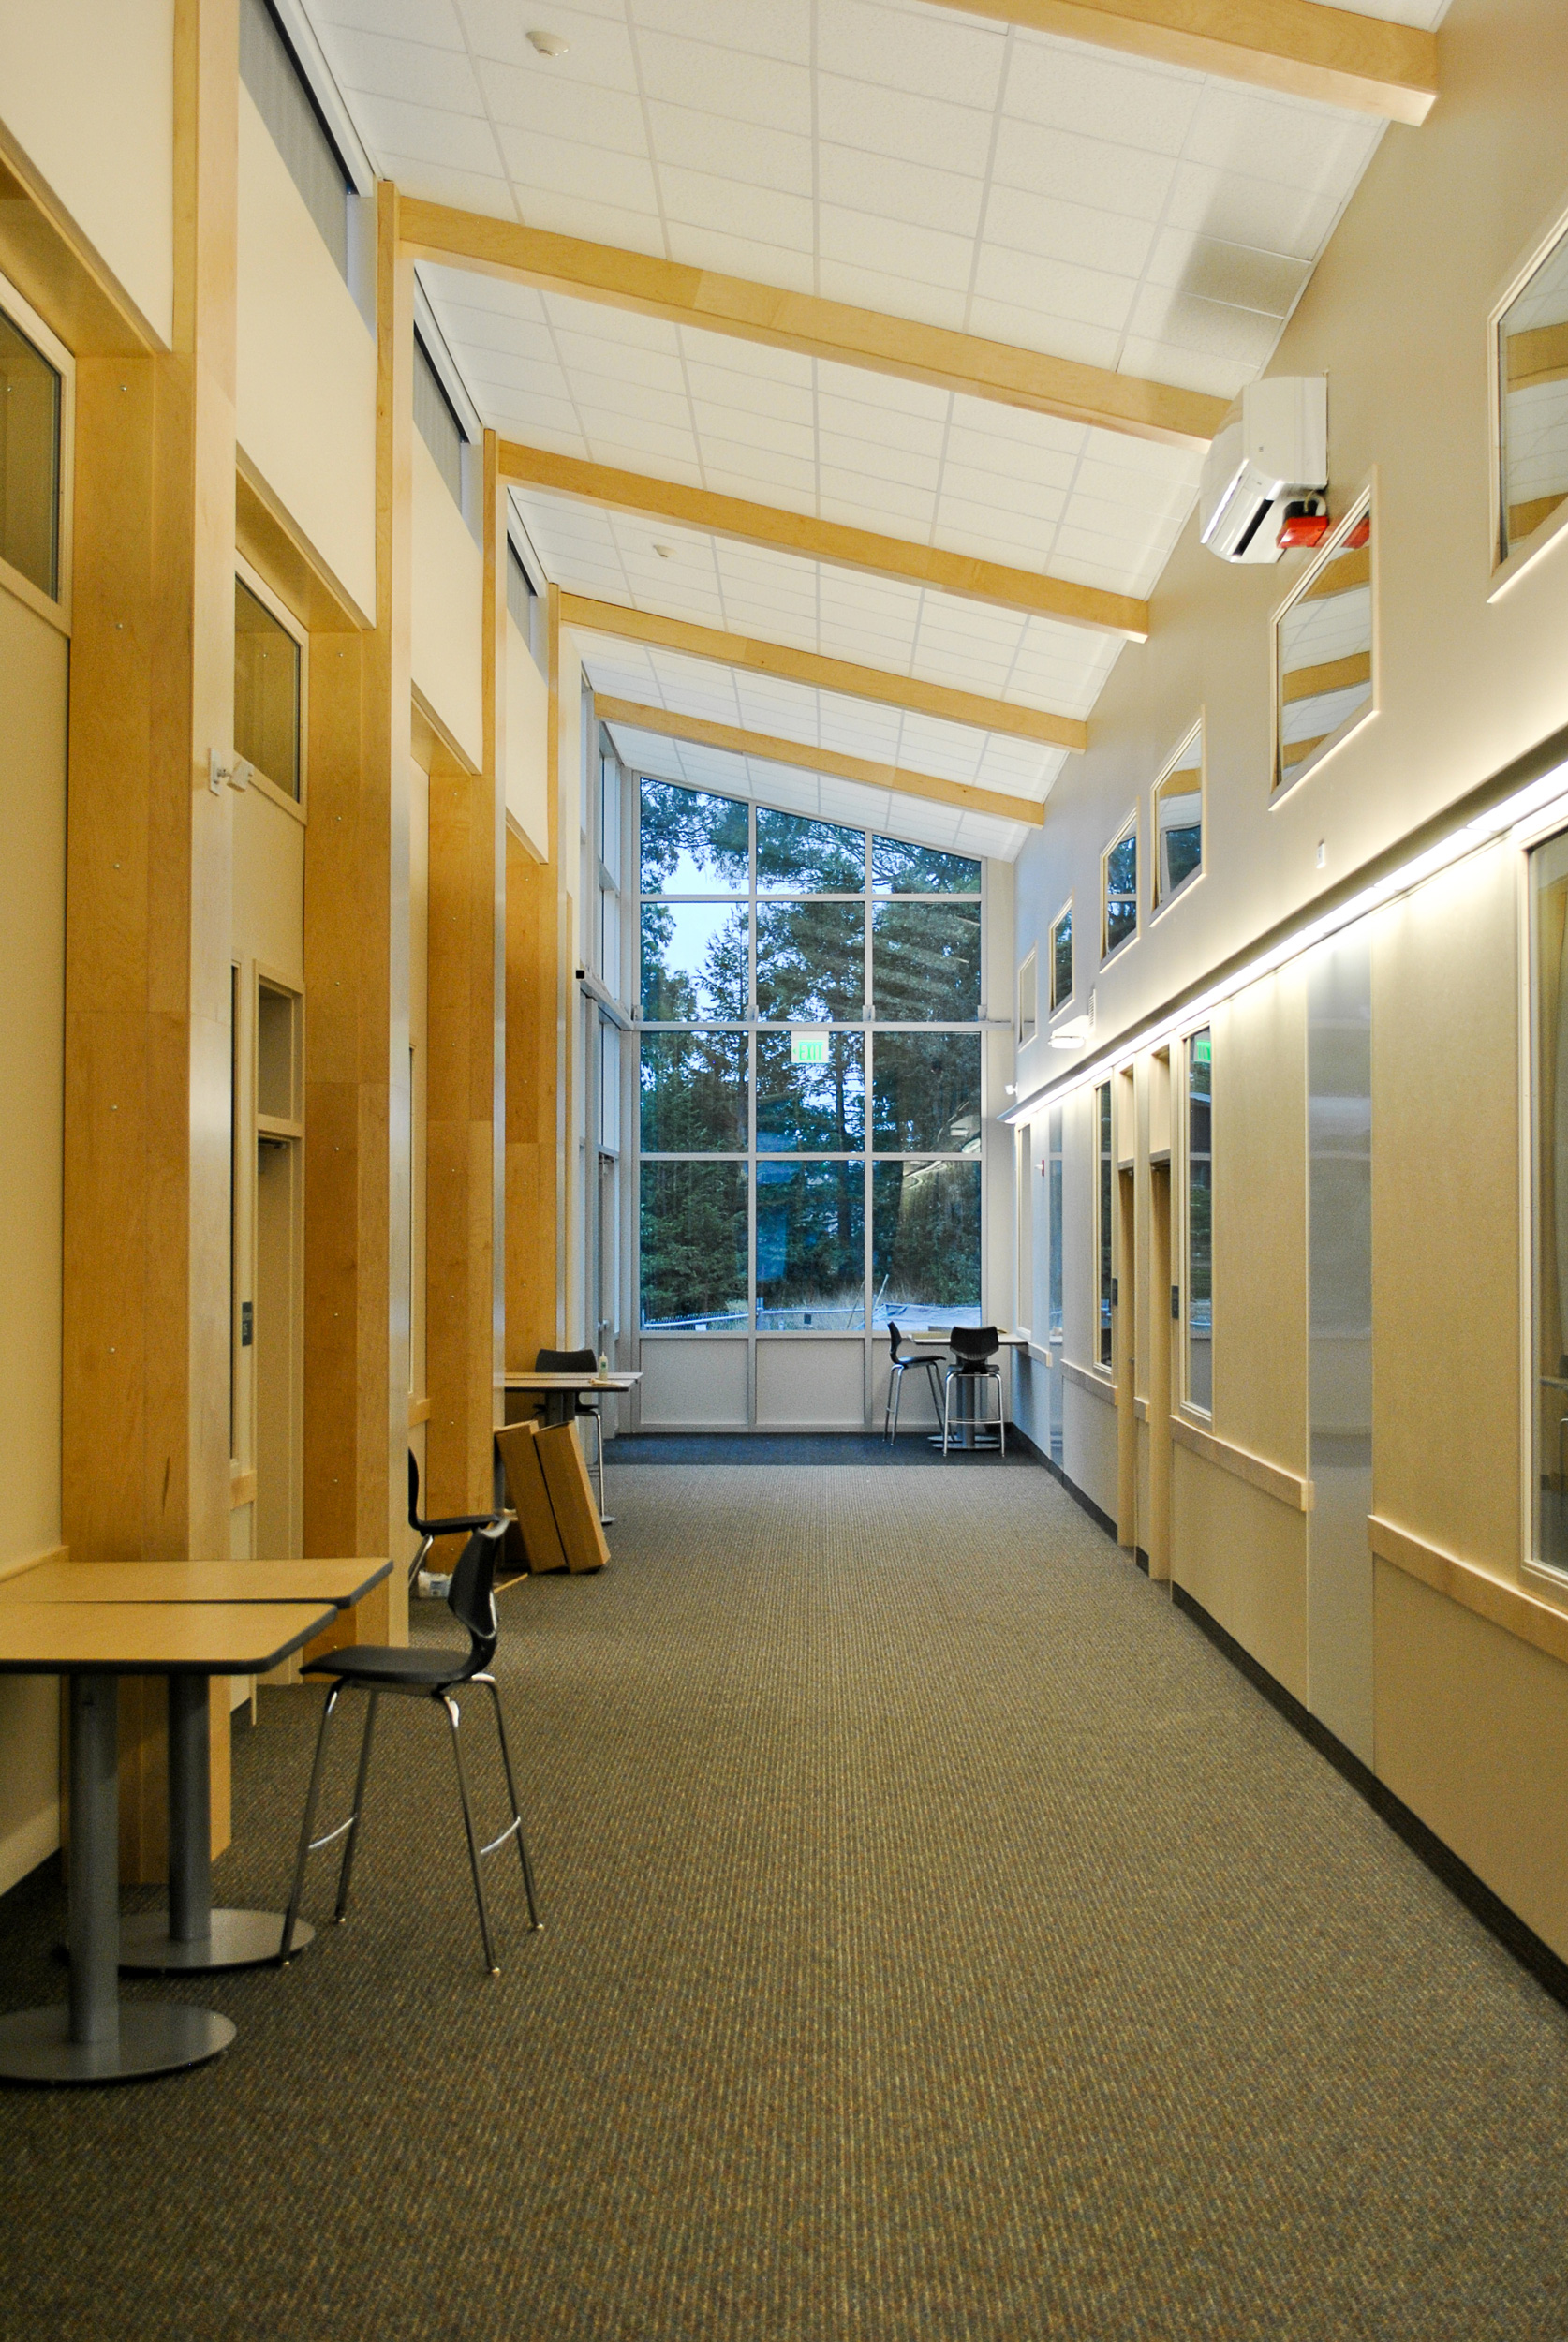 Thomas Page Academy Corridor Between Classrooms